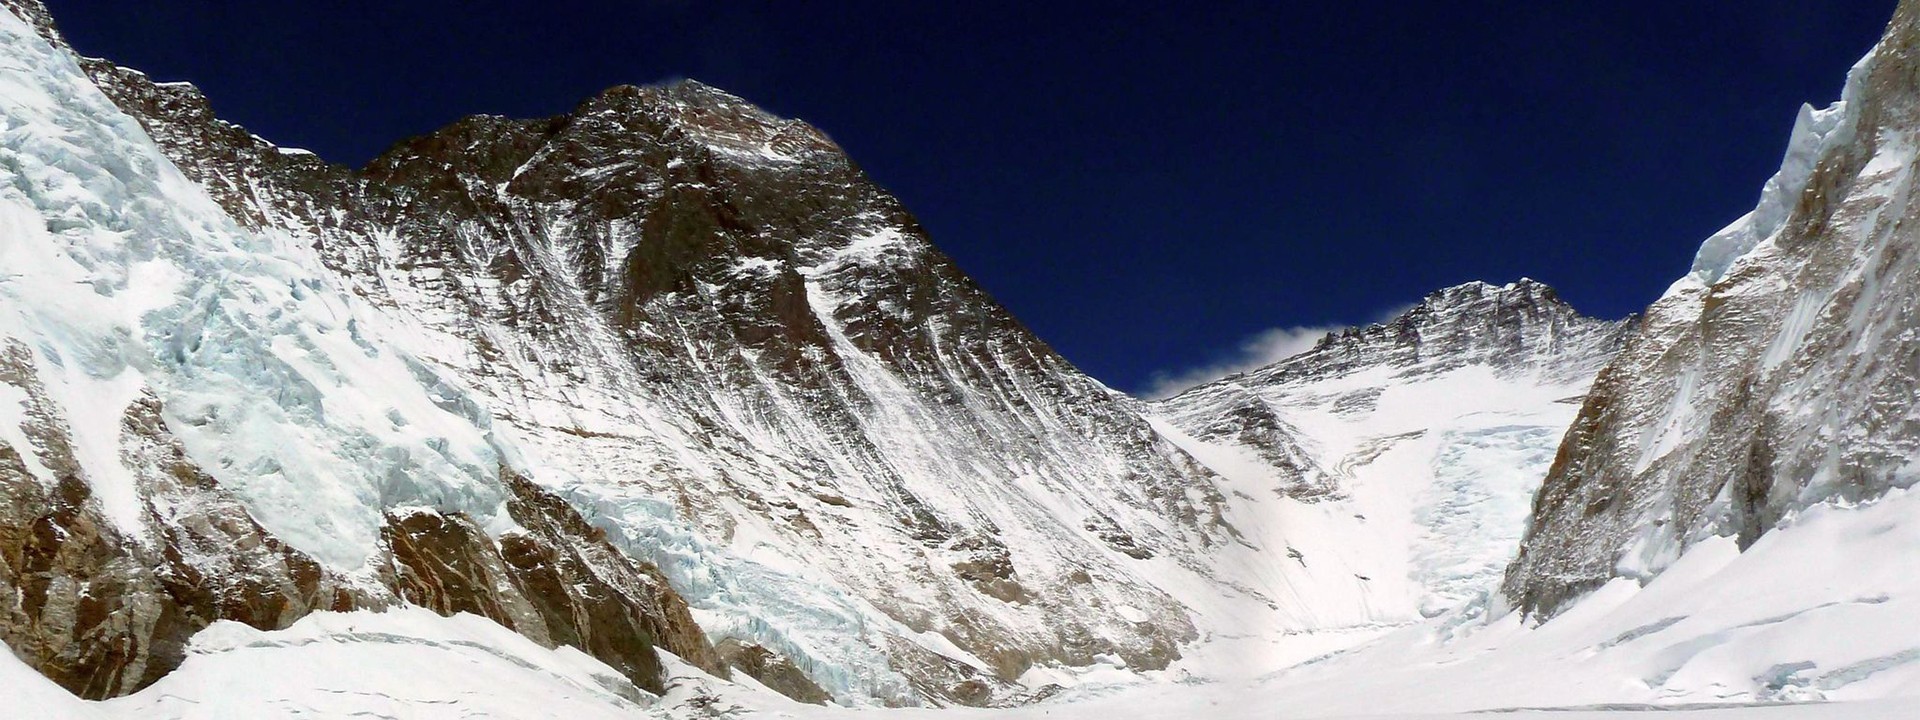 Mt. Lhotse Expedition (8,516 m /27,940 ft)